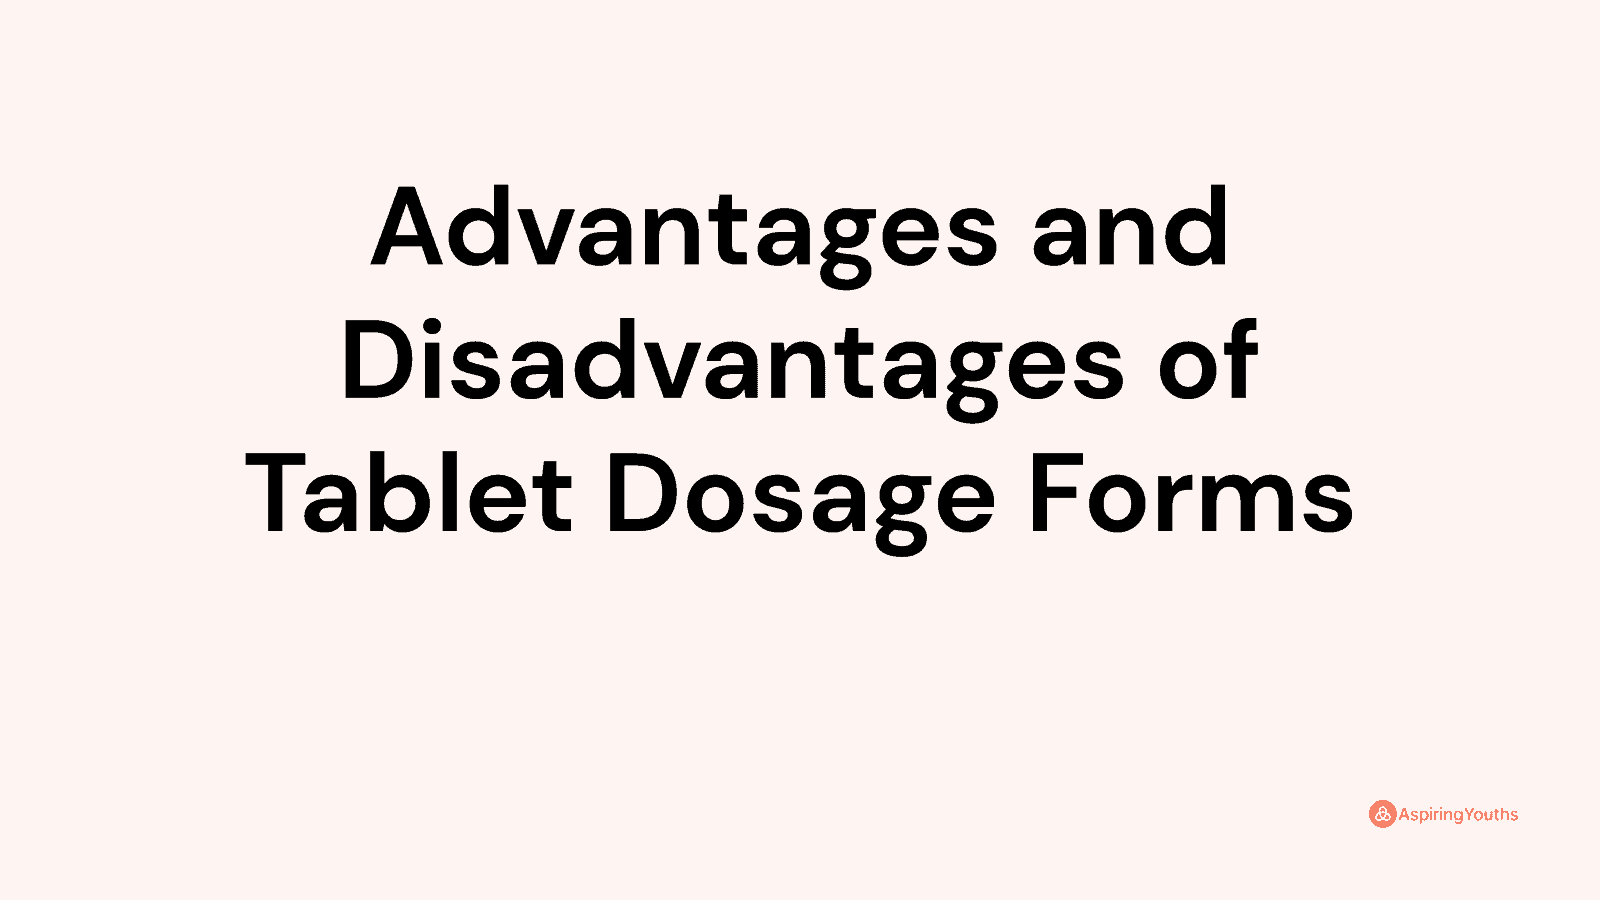 Advantages and disadvantages of Tablet Dosage Forms